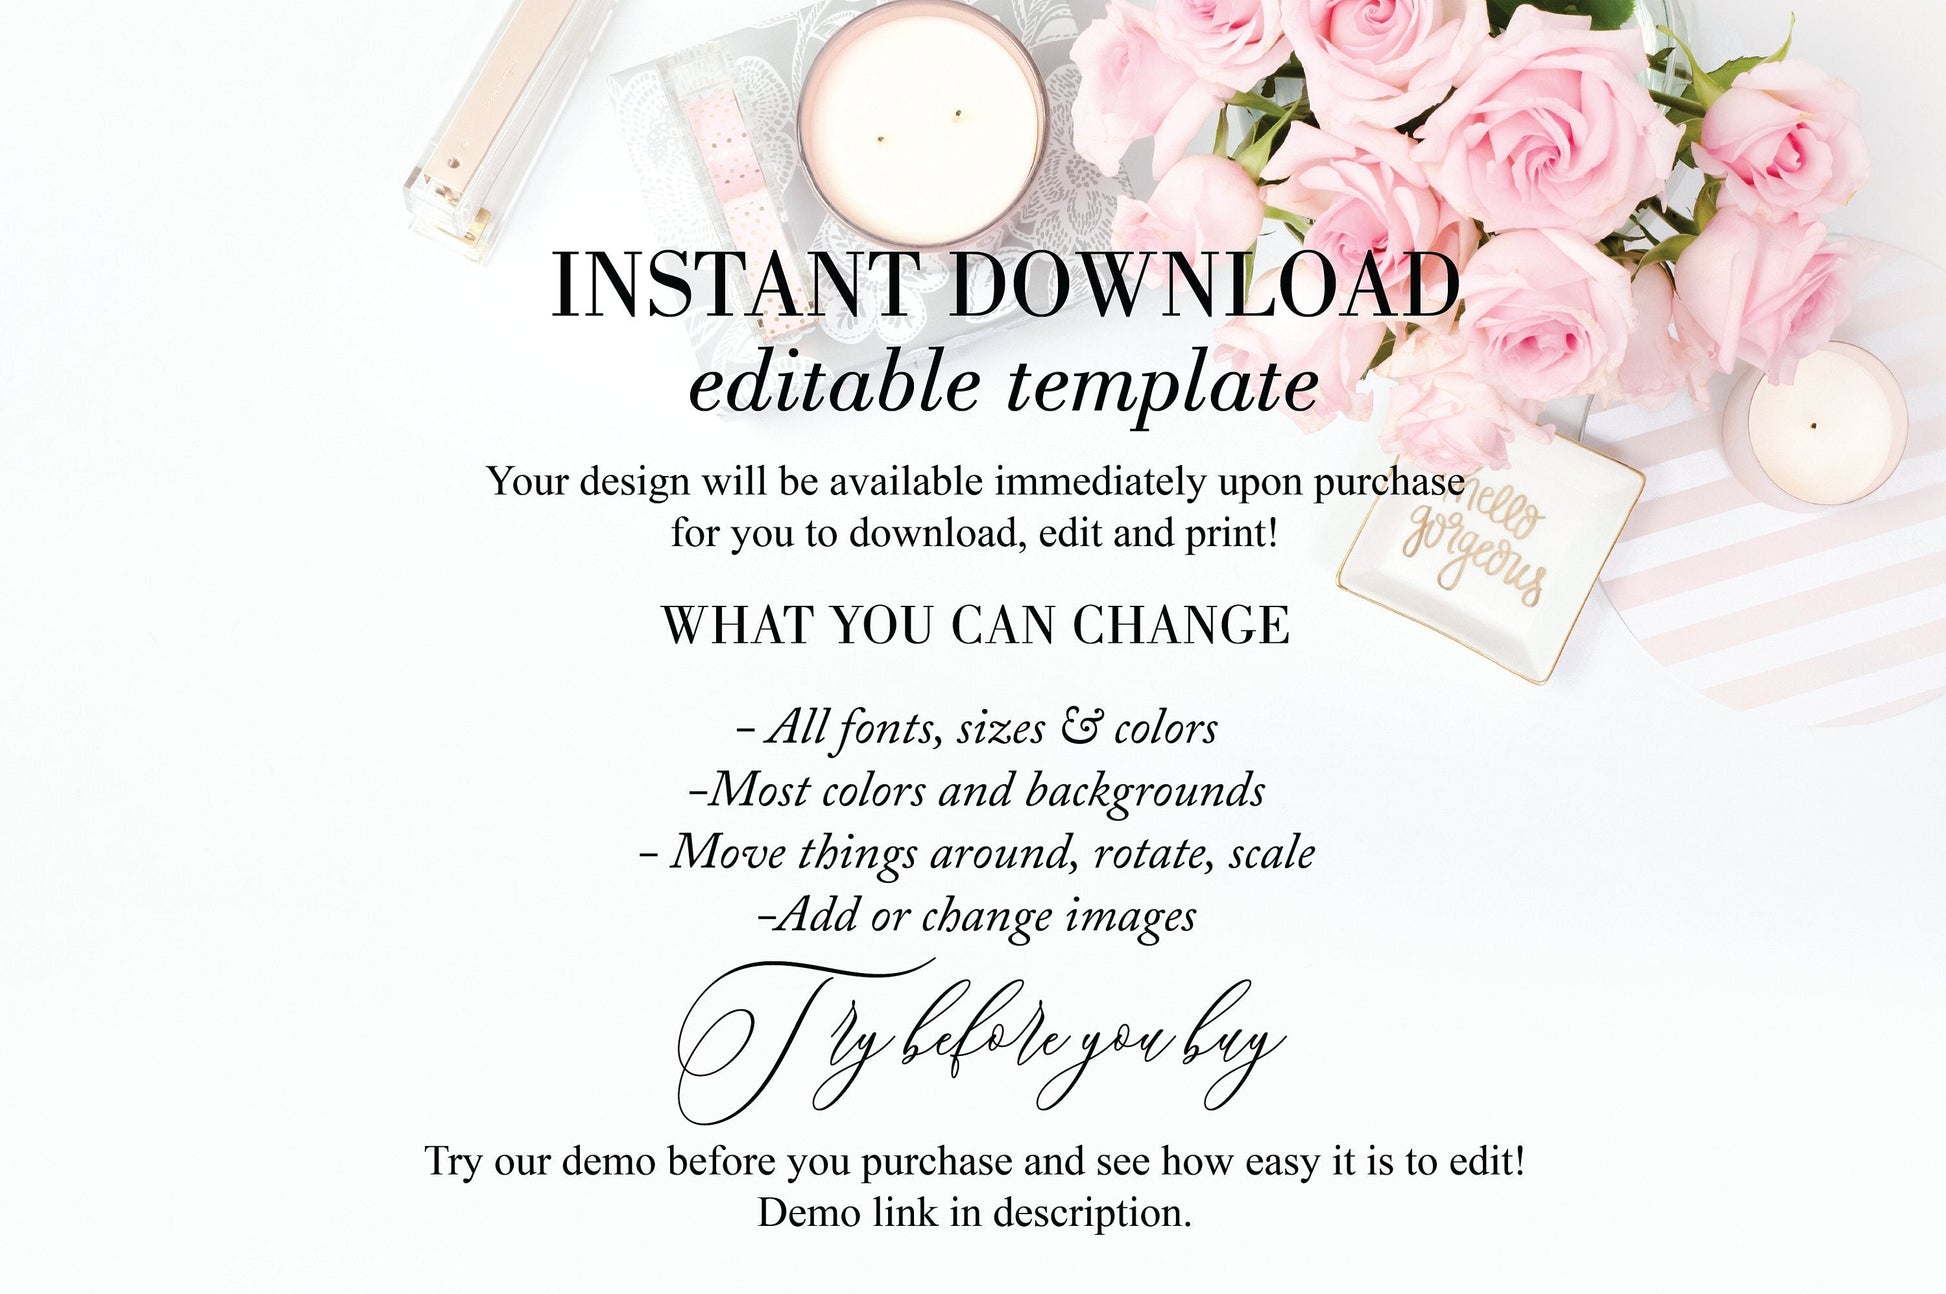 Minimal Wedding Invitation Template Instant Download Templett Printable Wedding Editable - Eileen WEDDING INVITATIONS SAVVY PAPER CO